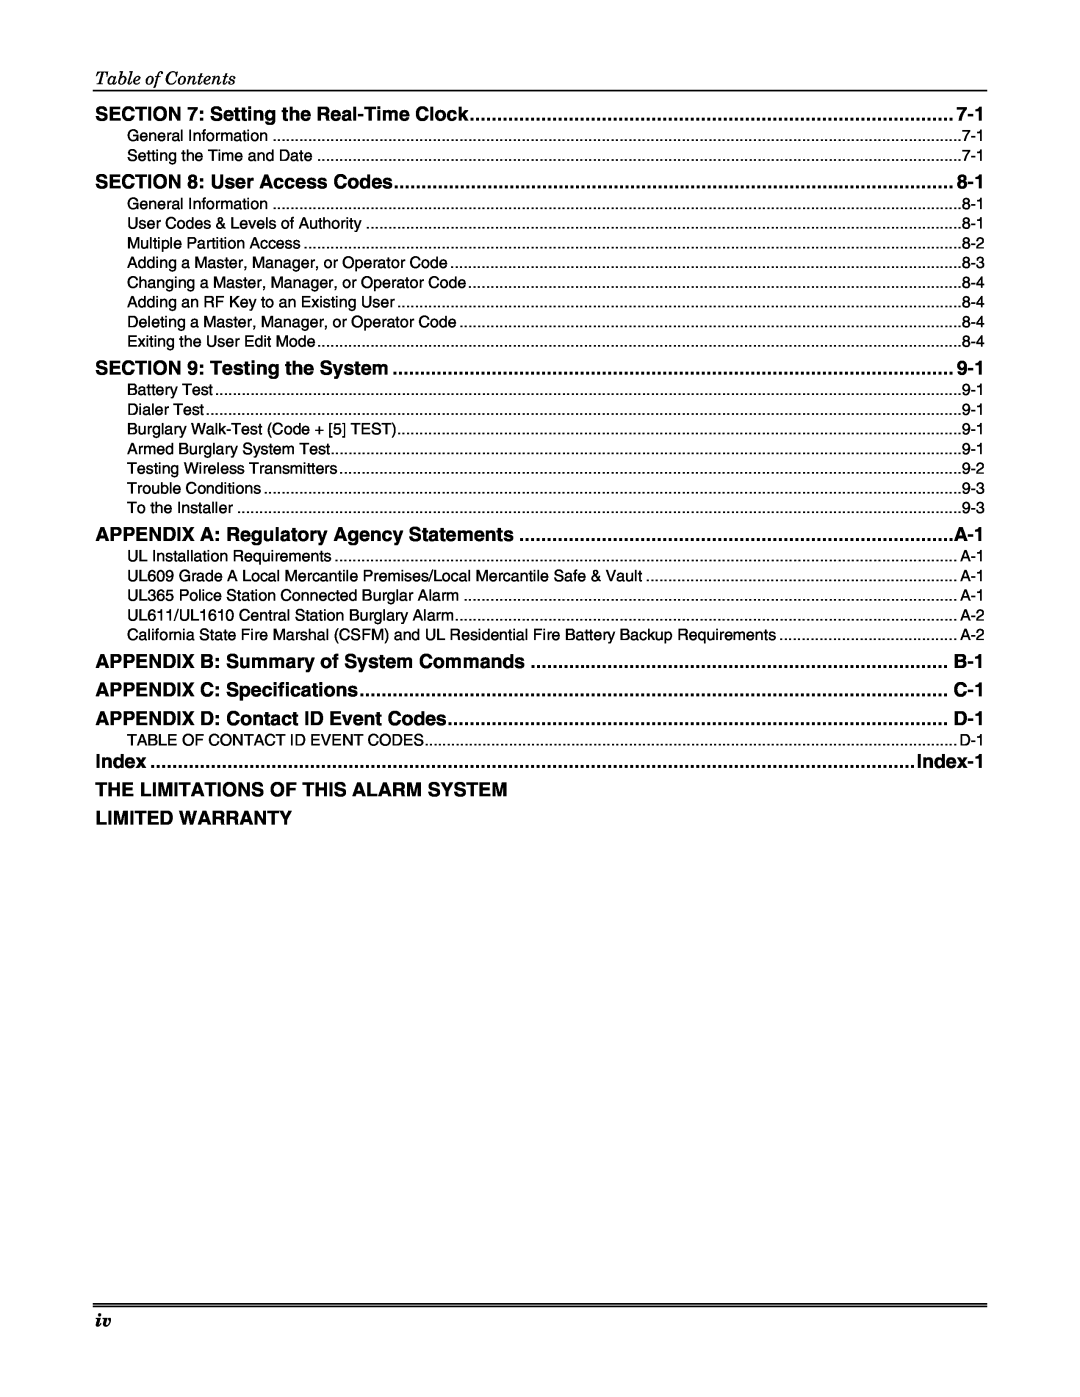 Honeywell ZyAIR G-3000, 3.5 manual Index 